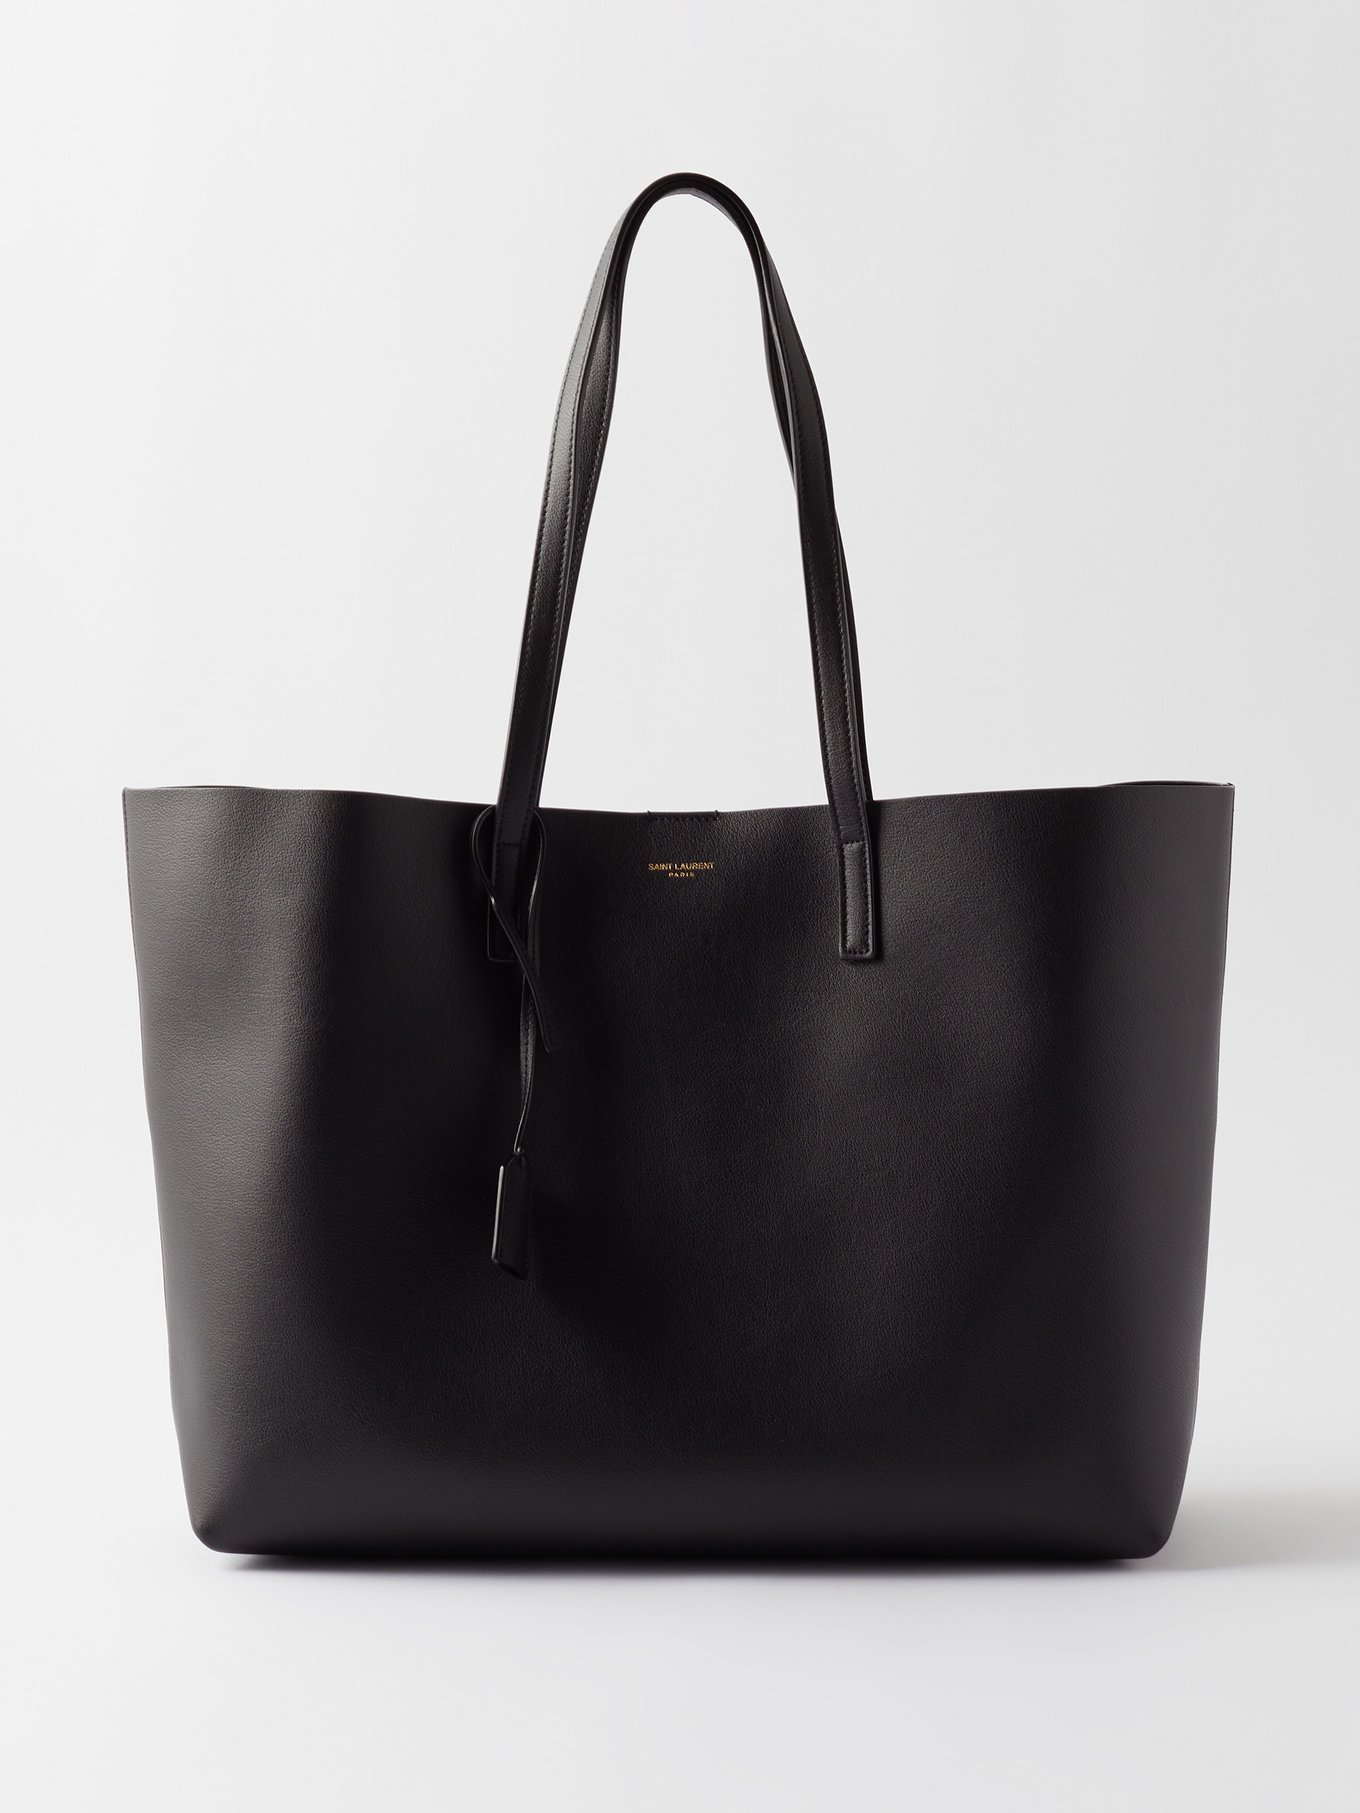 YSL Paris Handbag  Black leather handbags, Ysl paris, Handbag